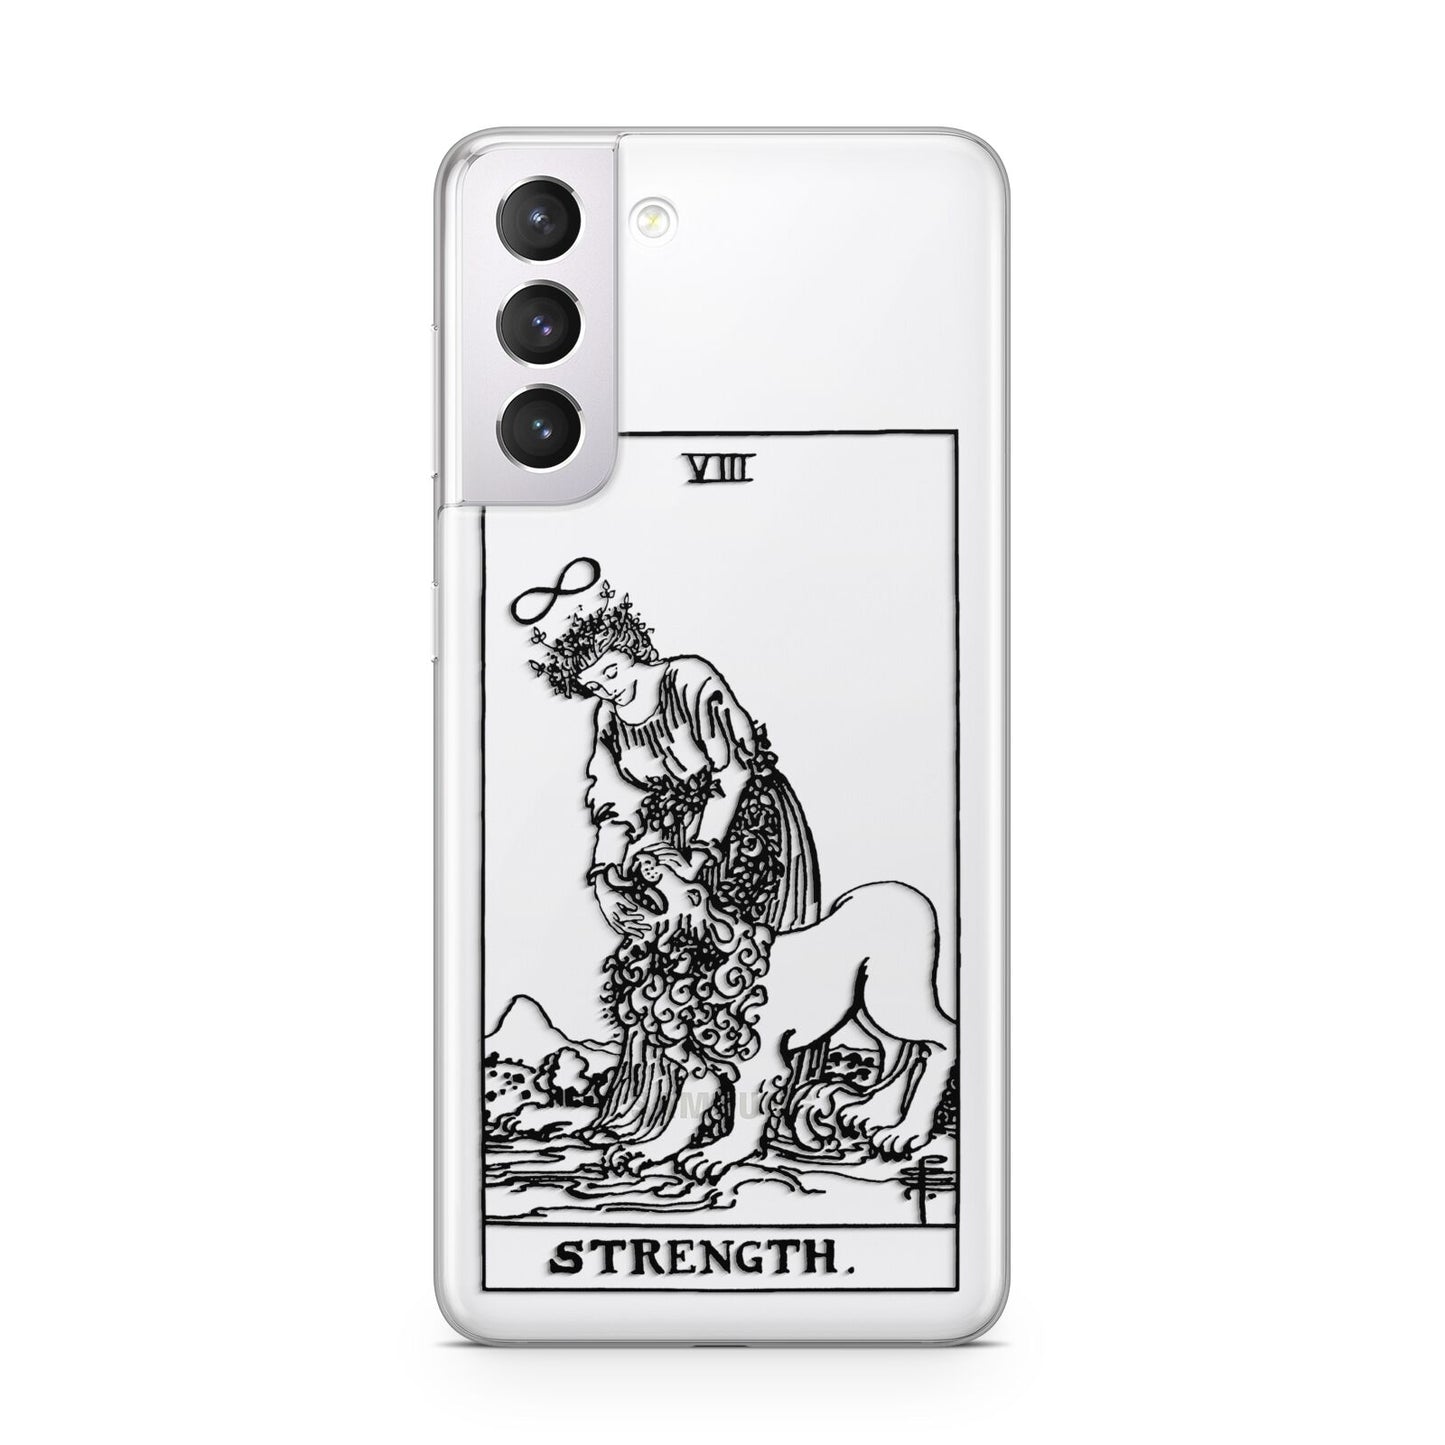 Strength Monochrome Tarot Card Samsung S21 Case